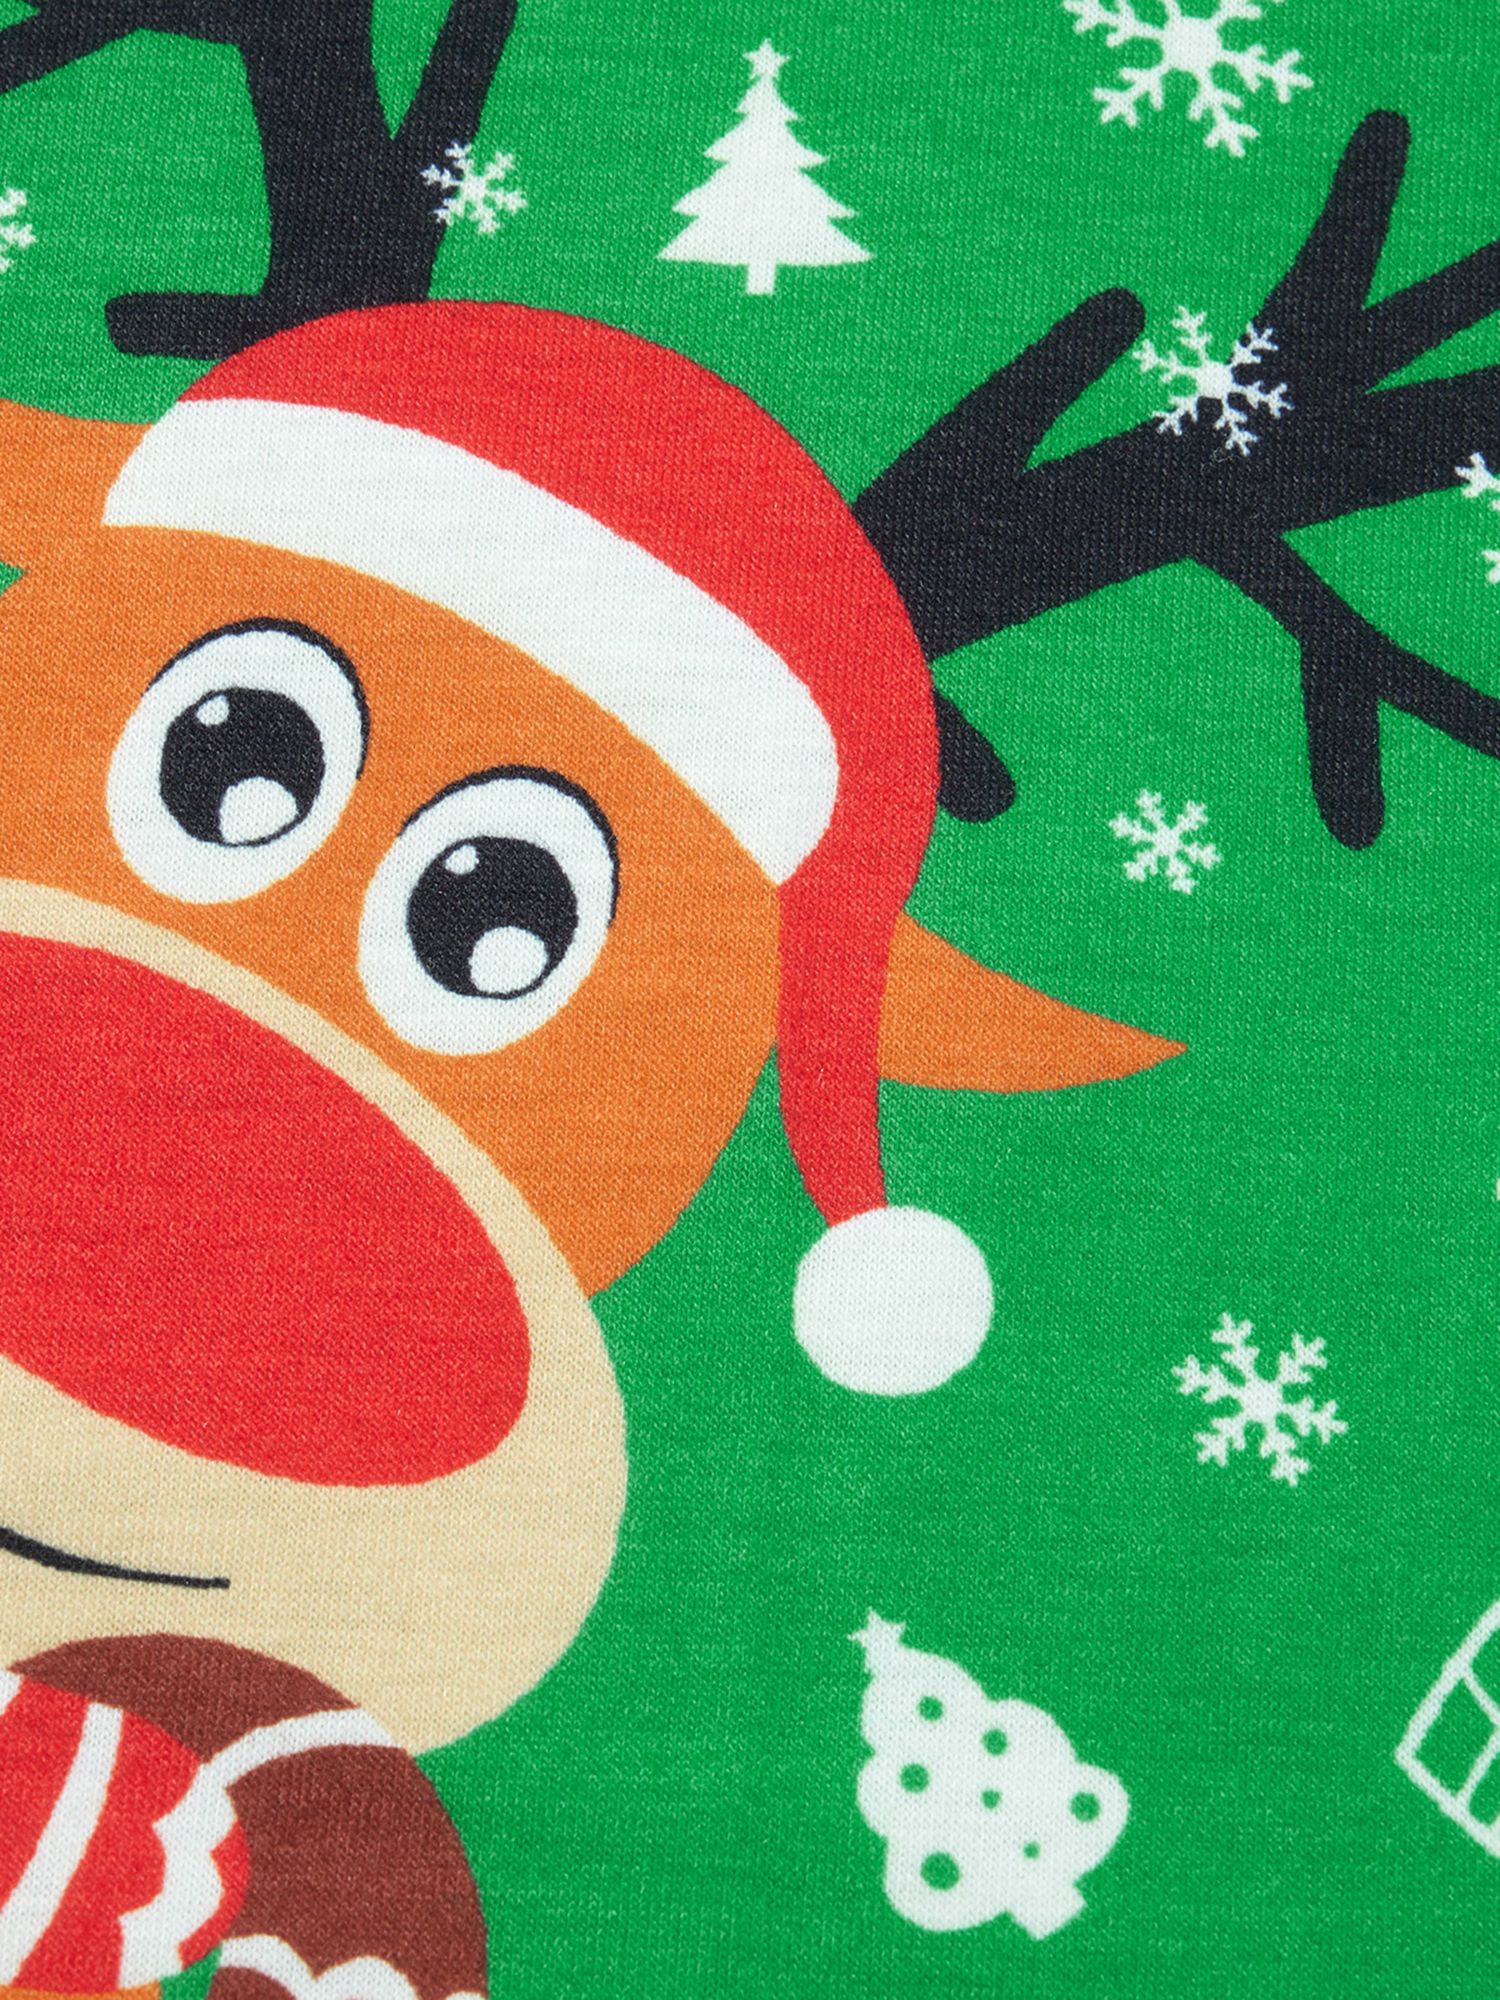 Christmas Family Pajamas Matching Sets Xmas Matching Pjs, Long Sleeve Deer Tops + Plaid Pants Set for Adults, Kid, Baby, Dog - image 5 of 6